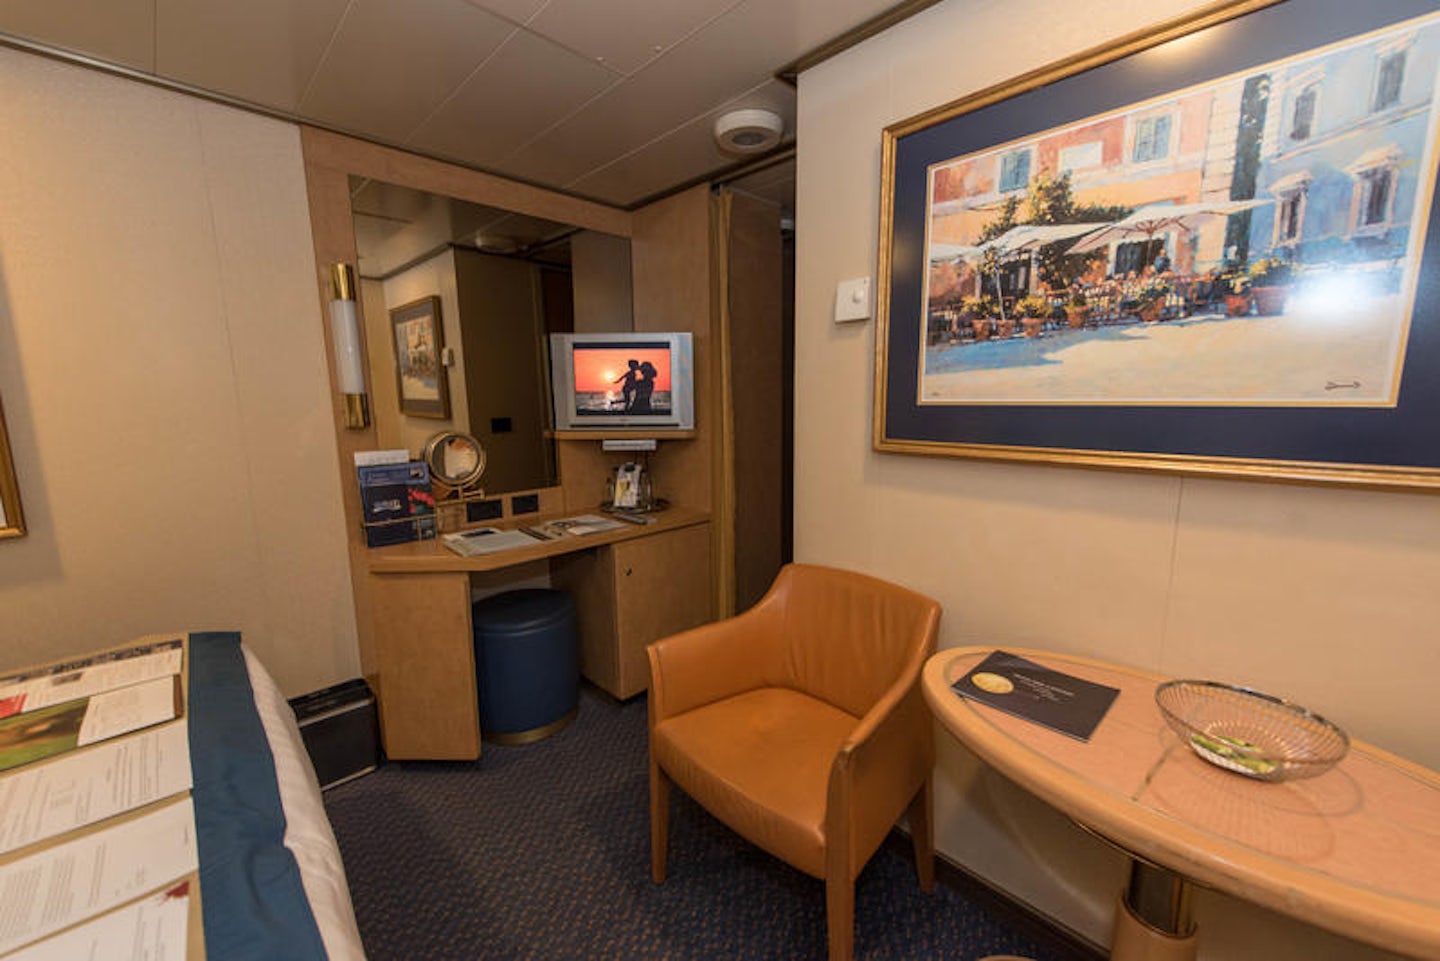 noordam cruise ship rooms